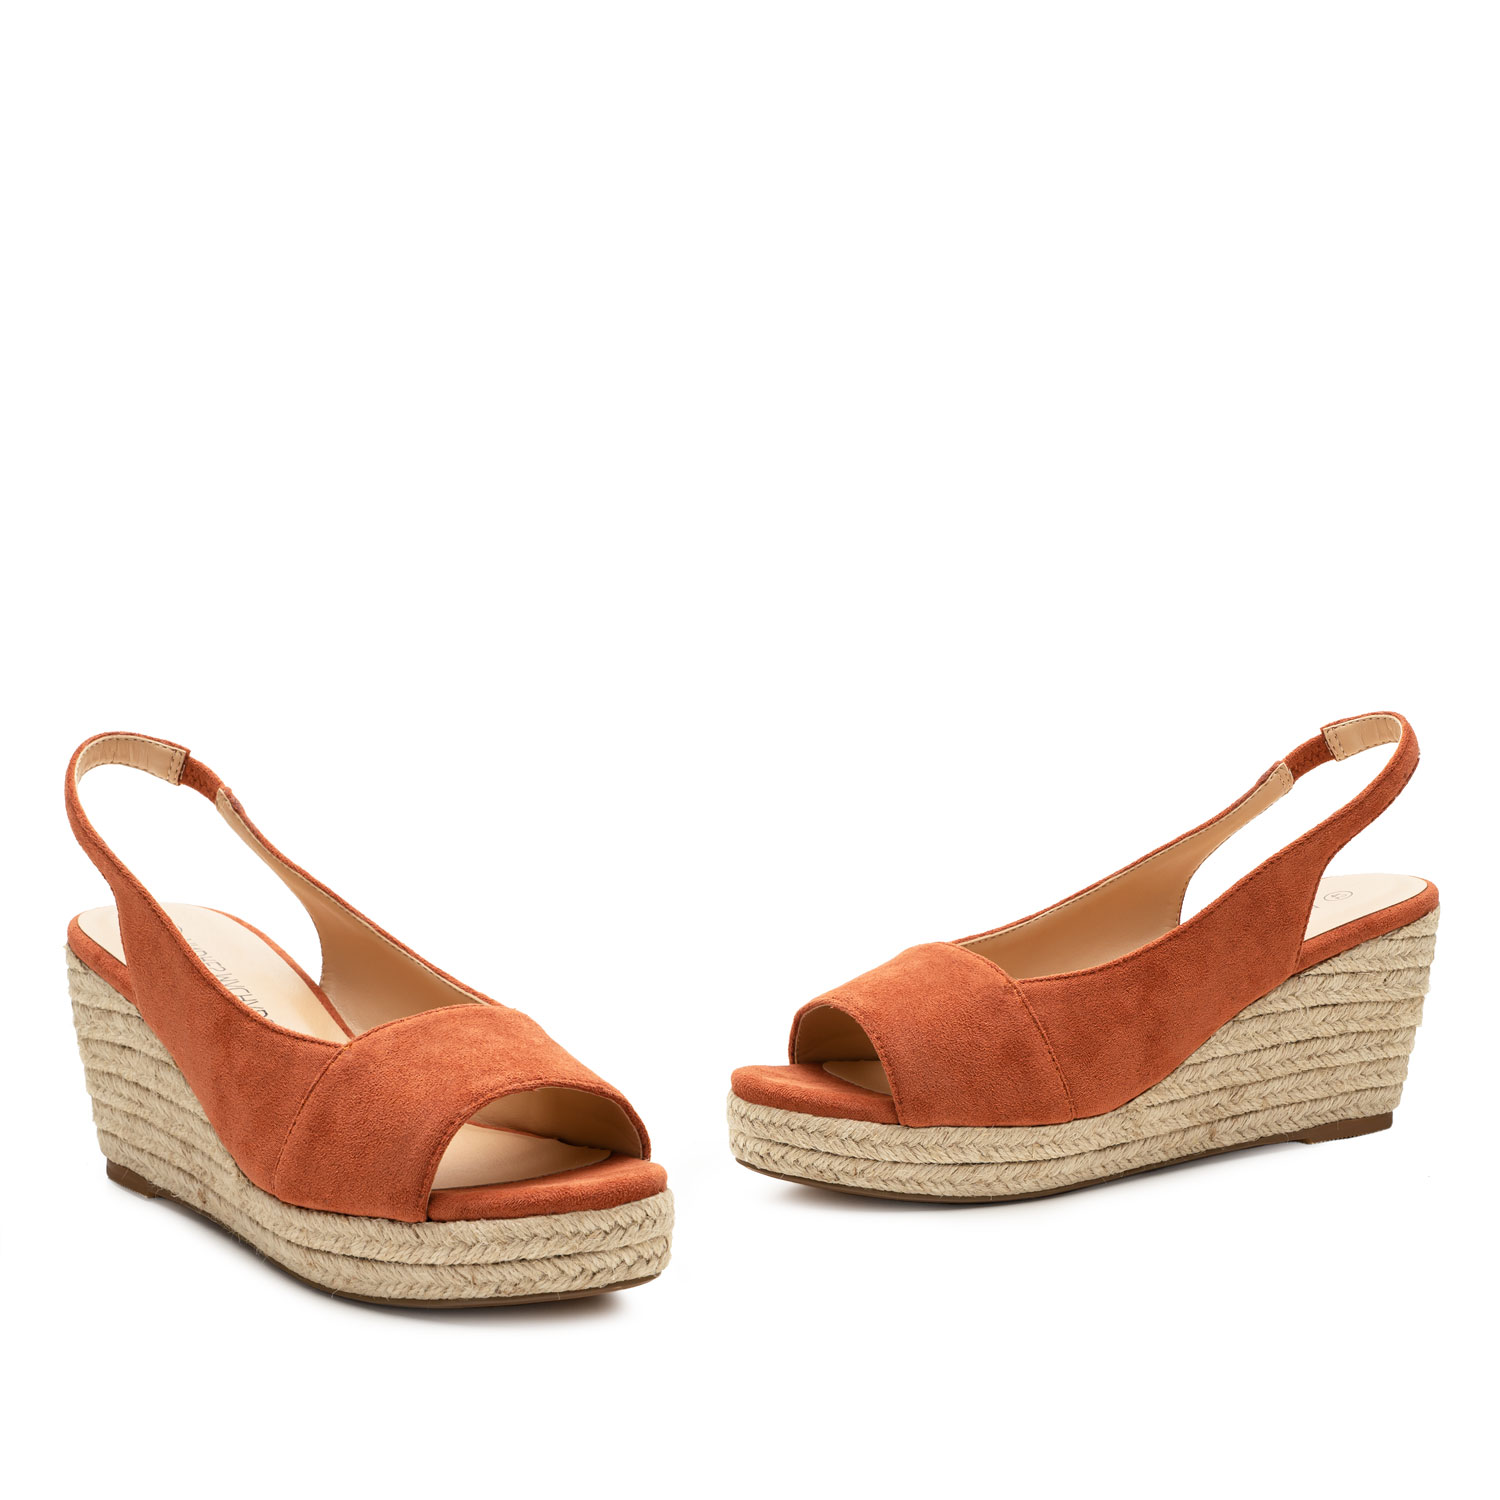 Sandalen mit Keilabsatz aus orangem Velourlederimitat 